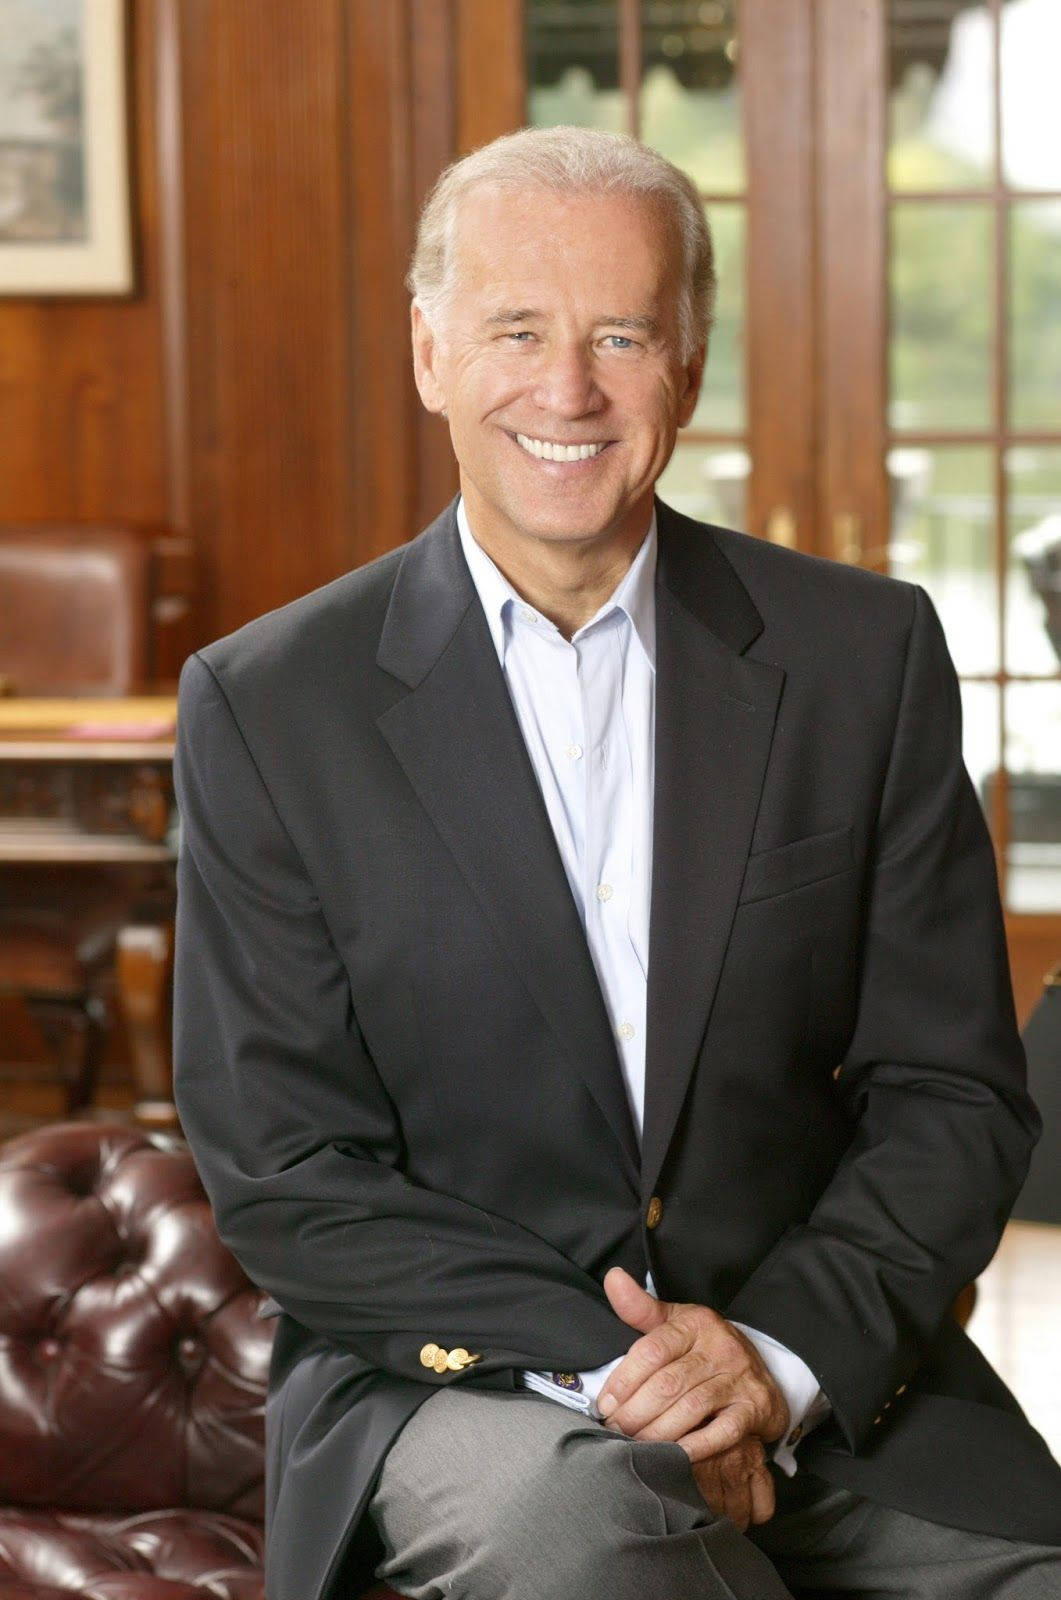 Joe Biden Smiling Portrait